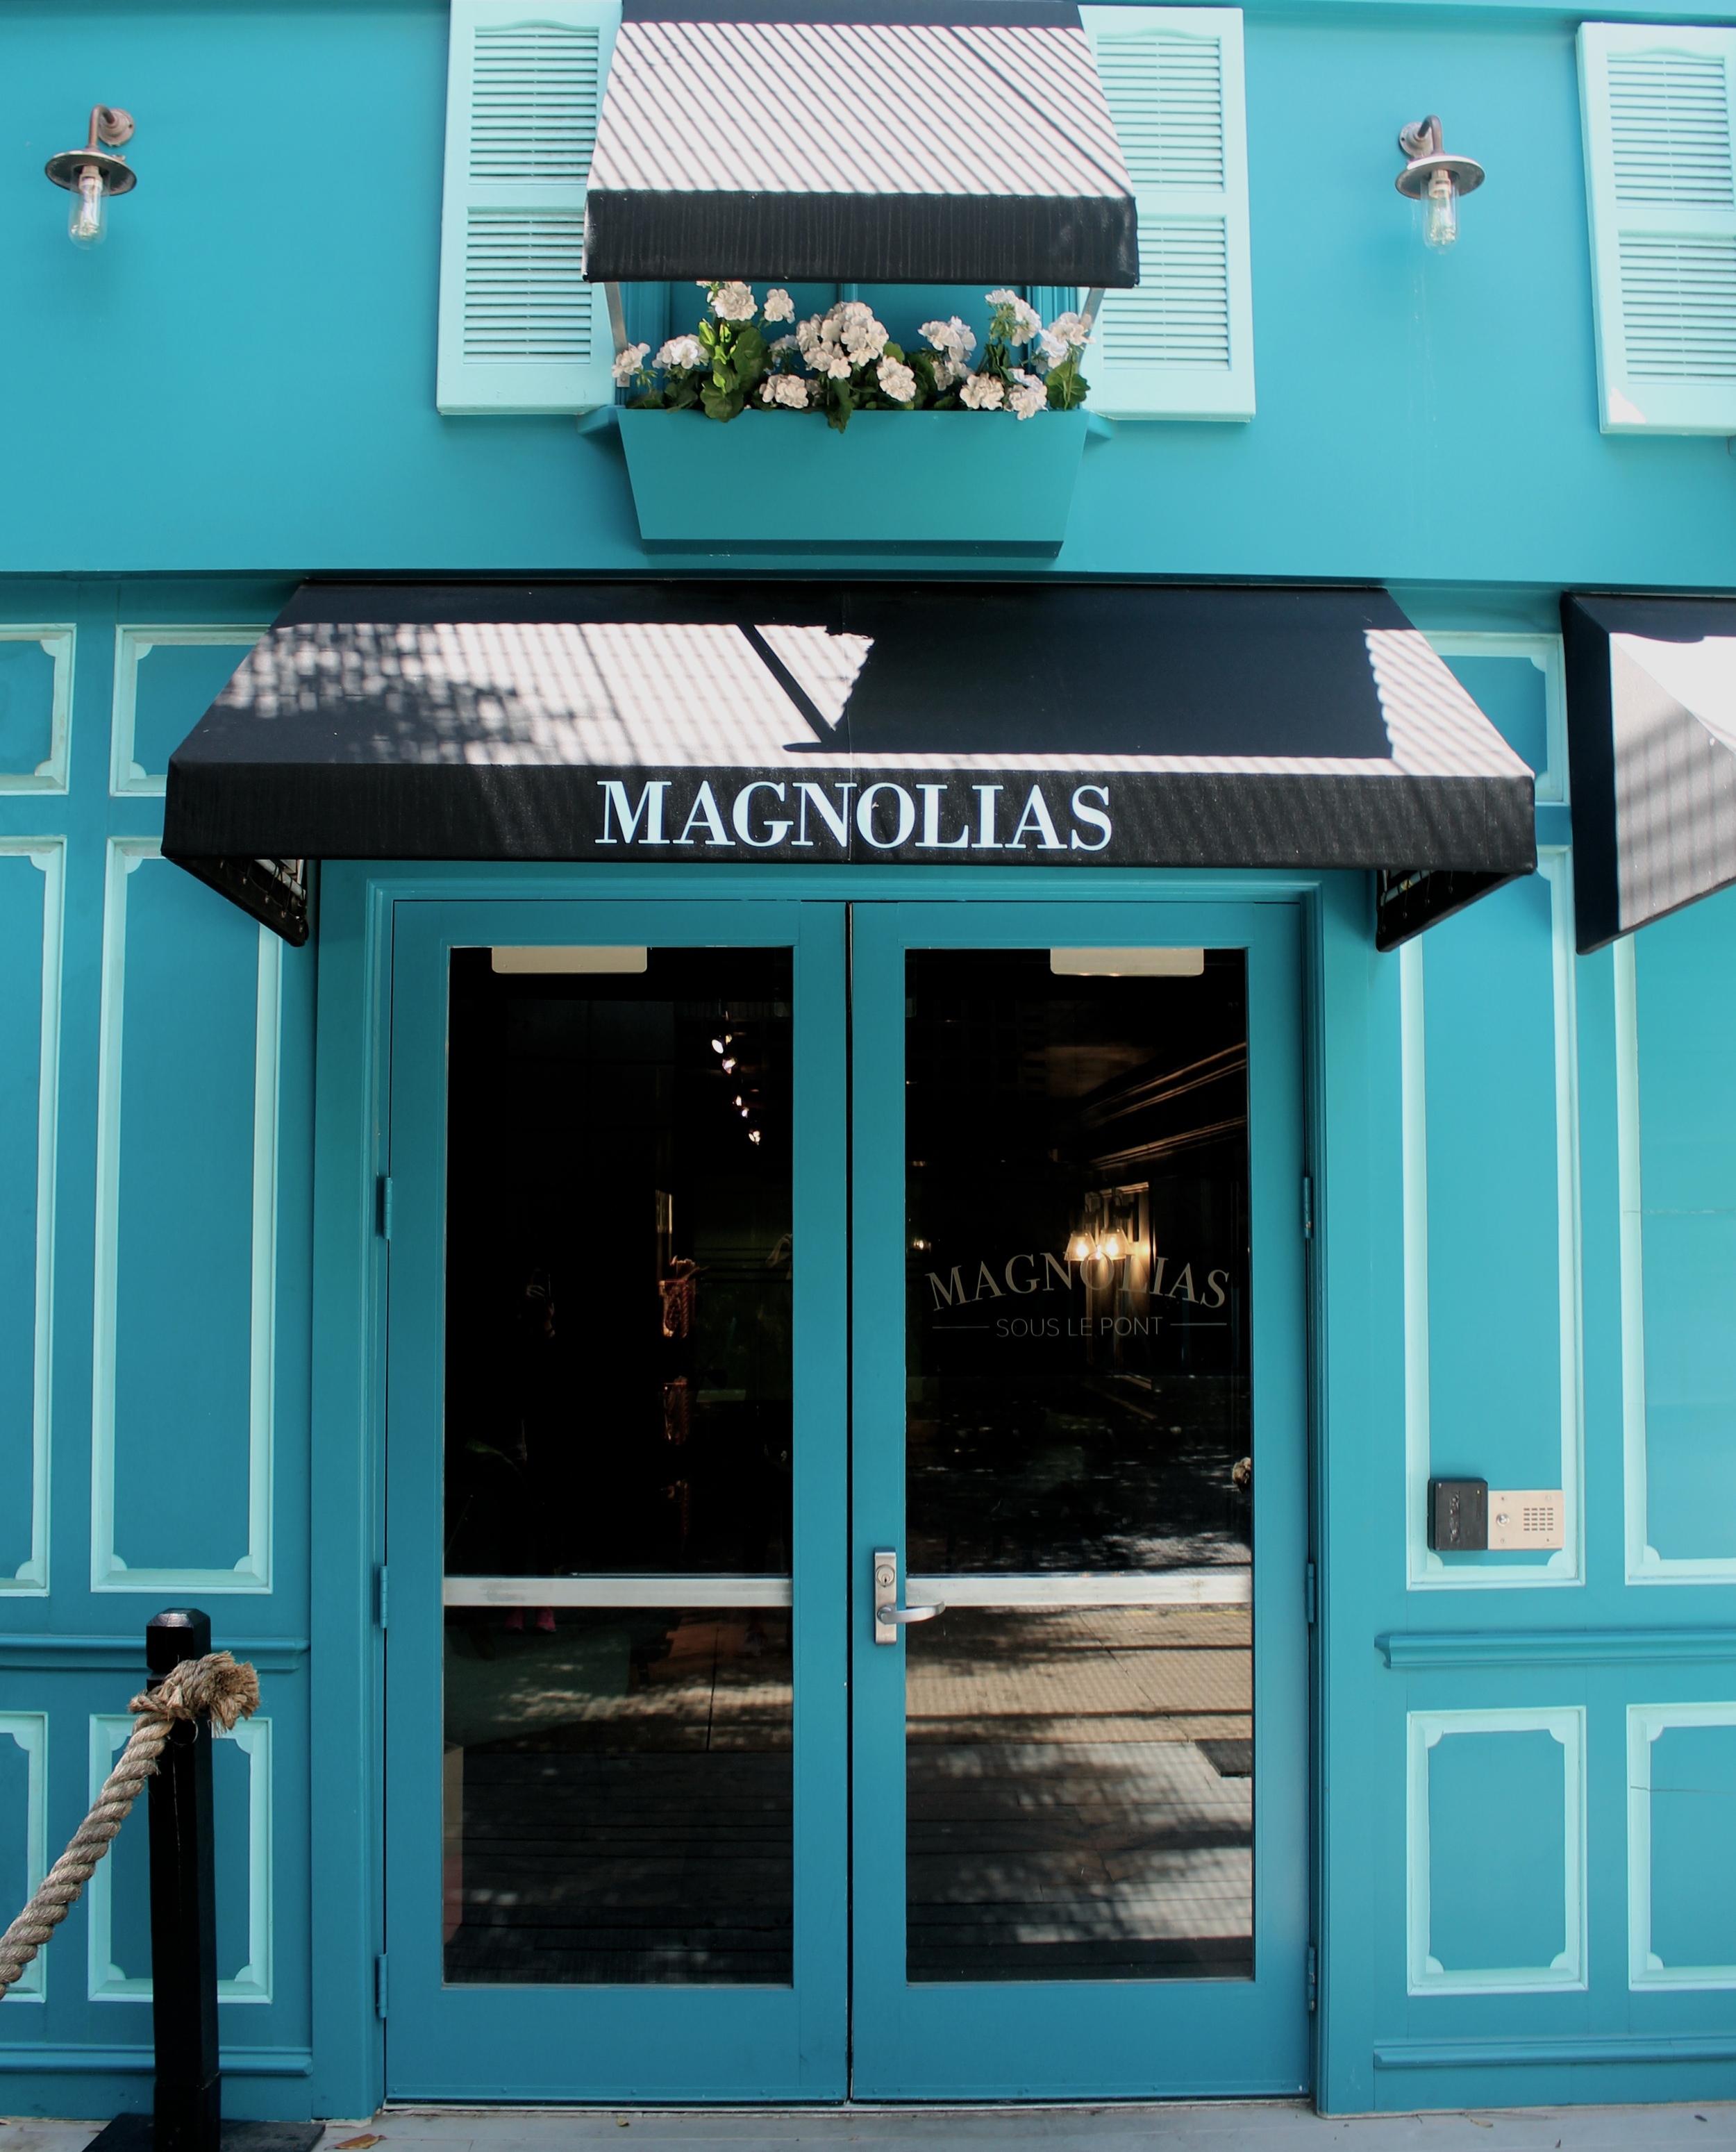 Dallas Coffee Shop Guide Magnolias Sous Le Pont by Miami Blogger Zeinab Kristen | travel & lifestyle blog 